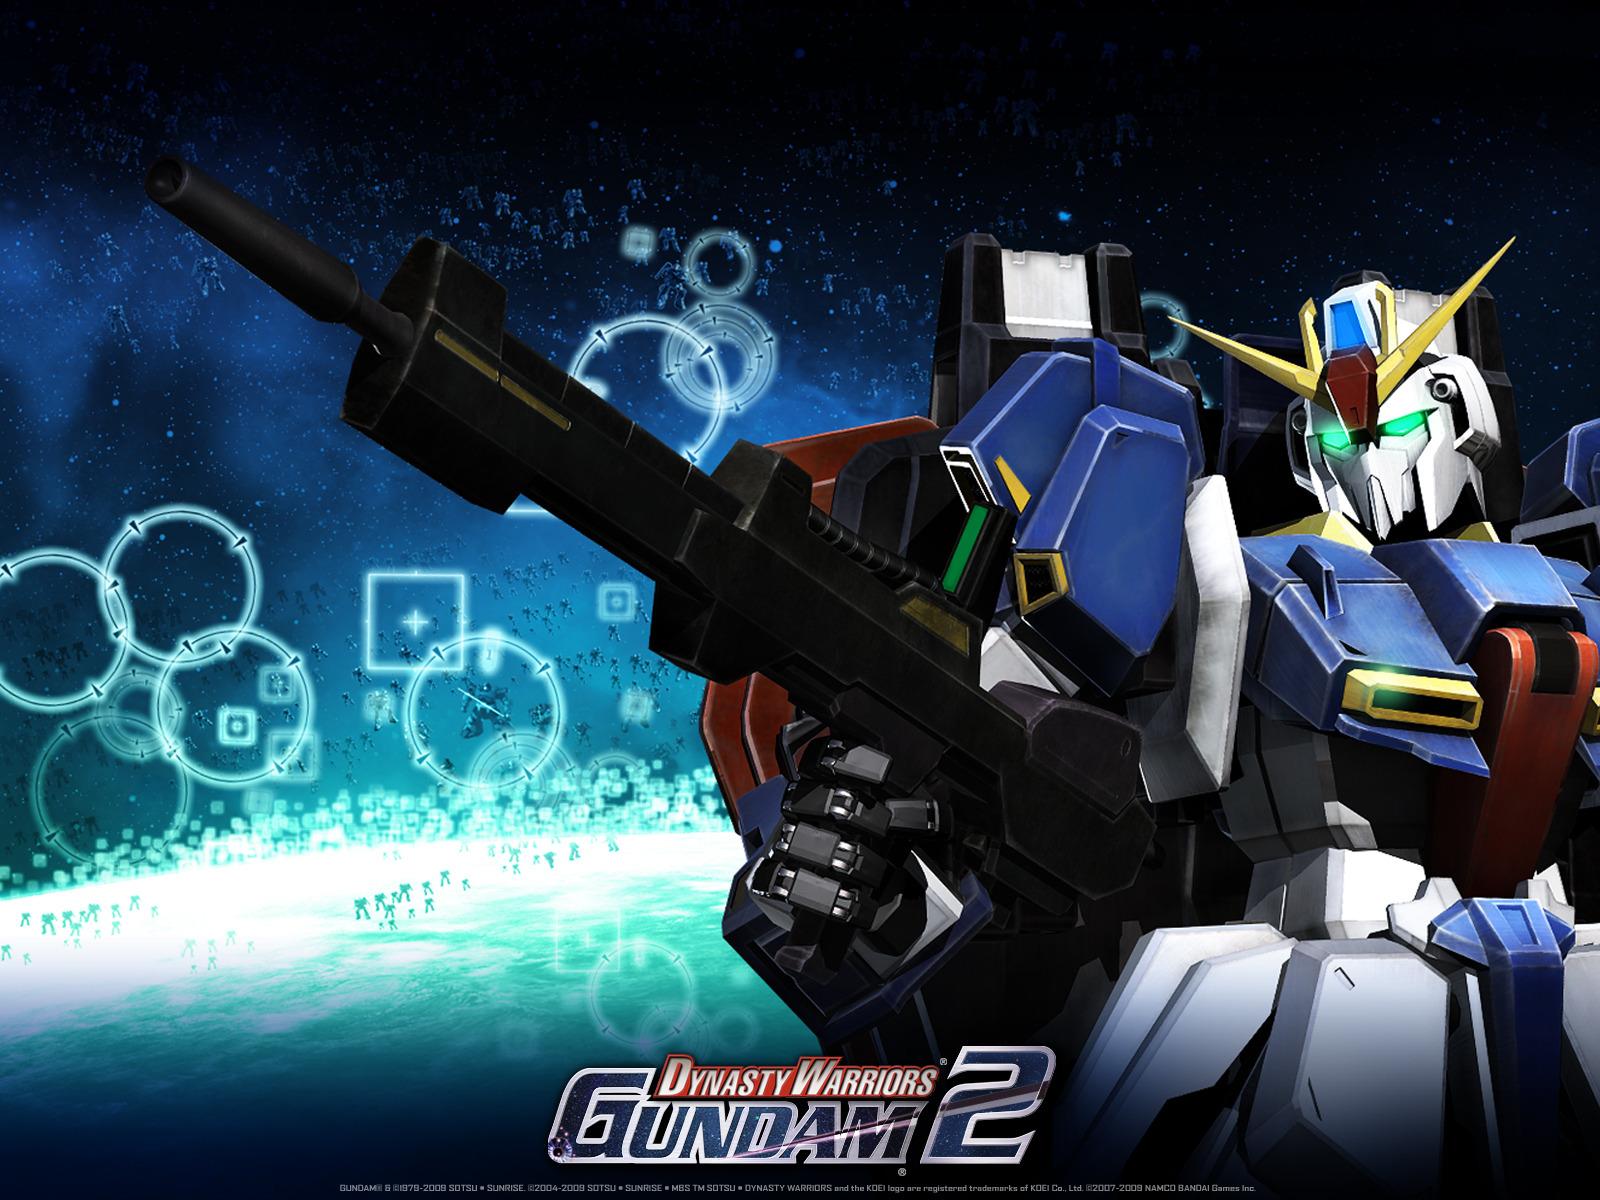 Zeta Gundam Wallpapers Top Free Zeta Gundam Backgrounds Wallpaperaccess